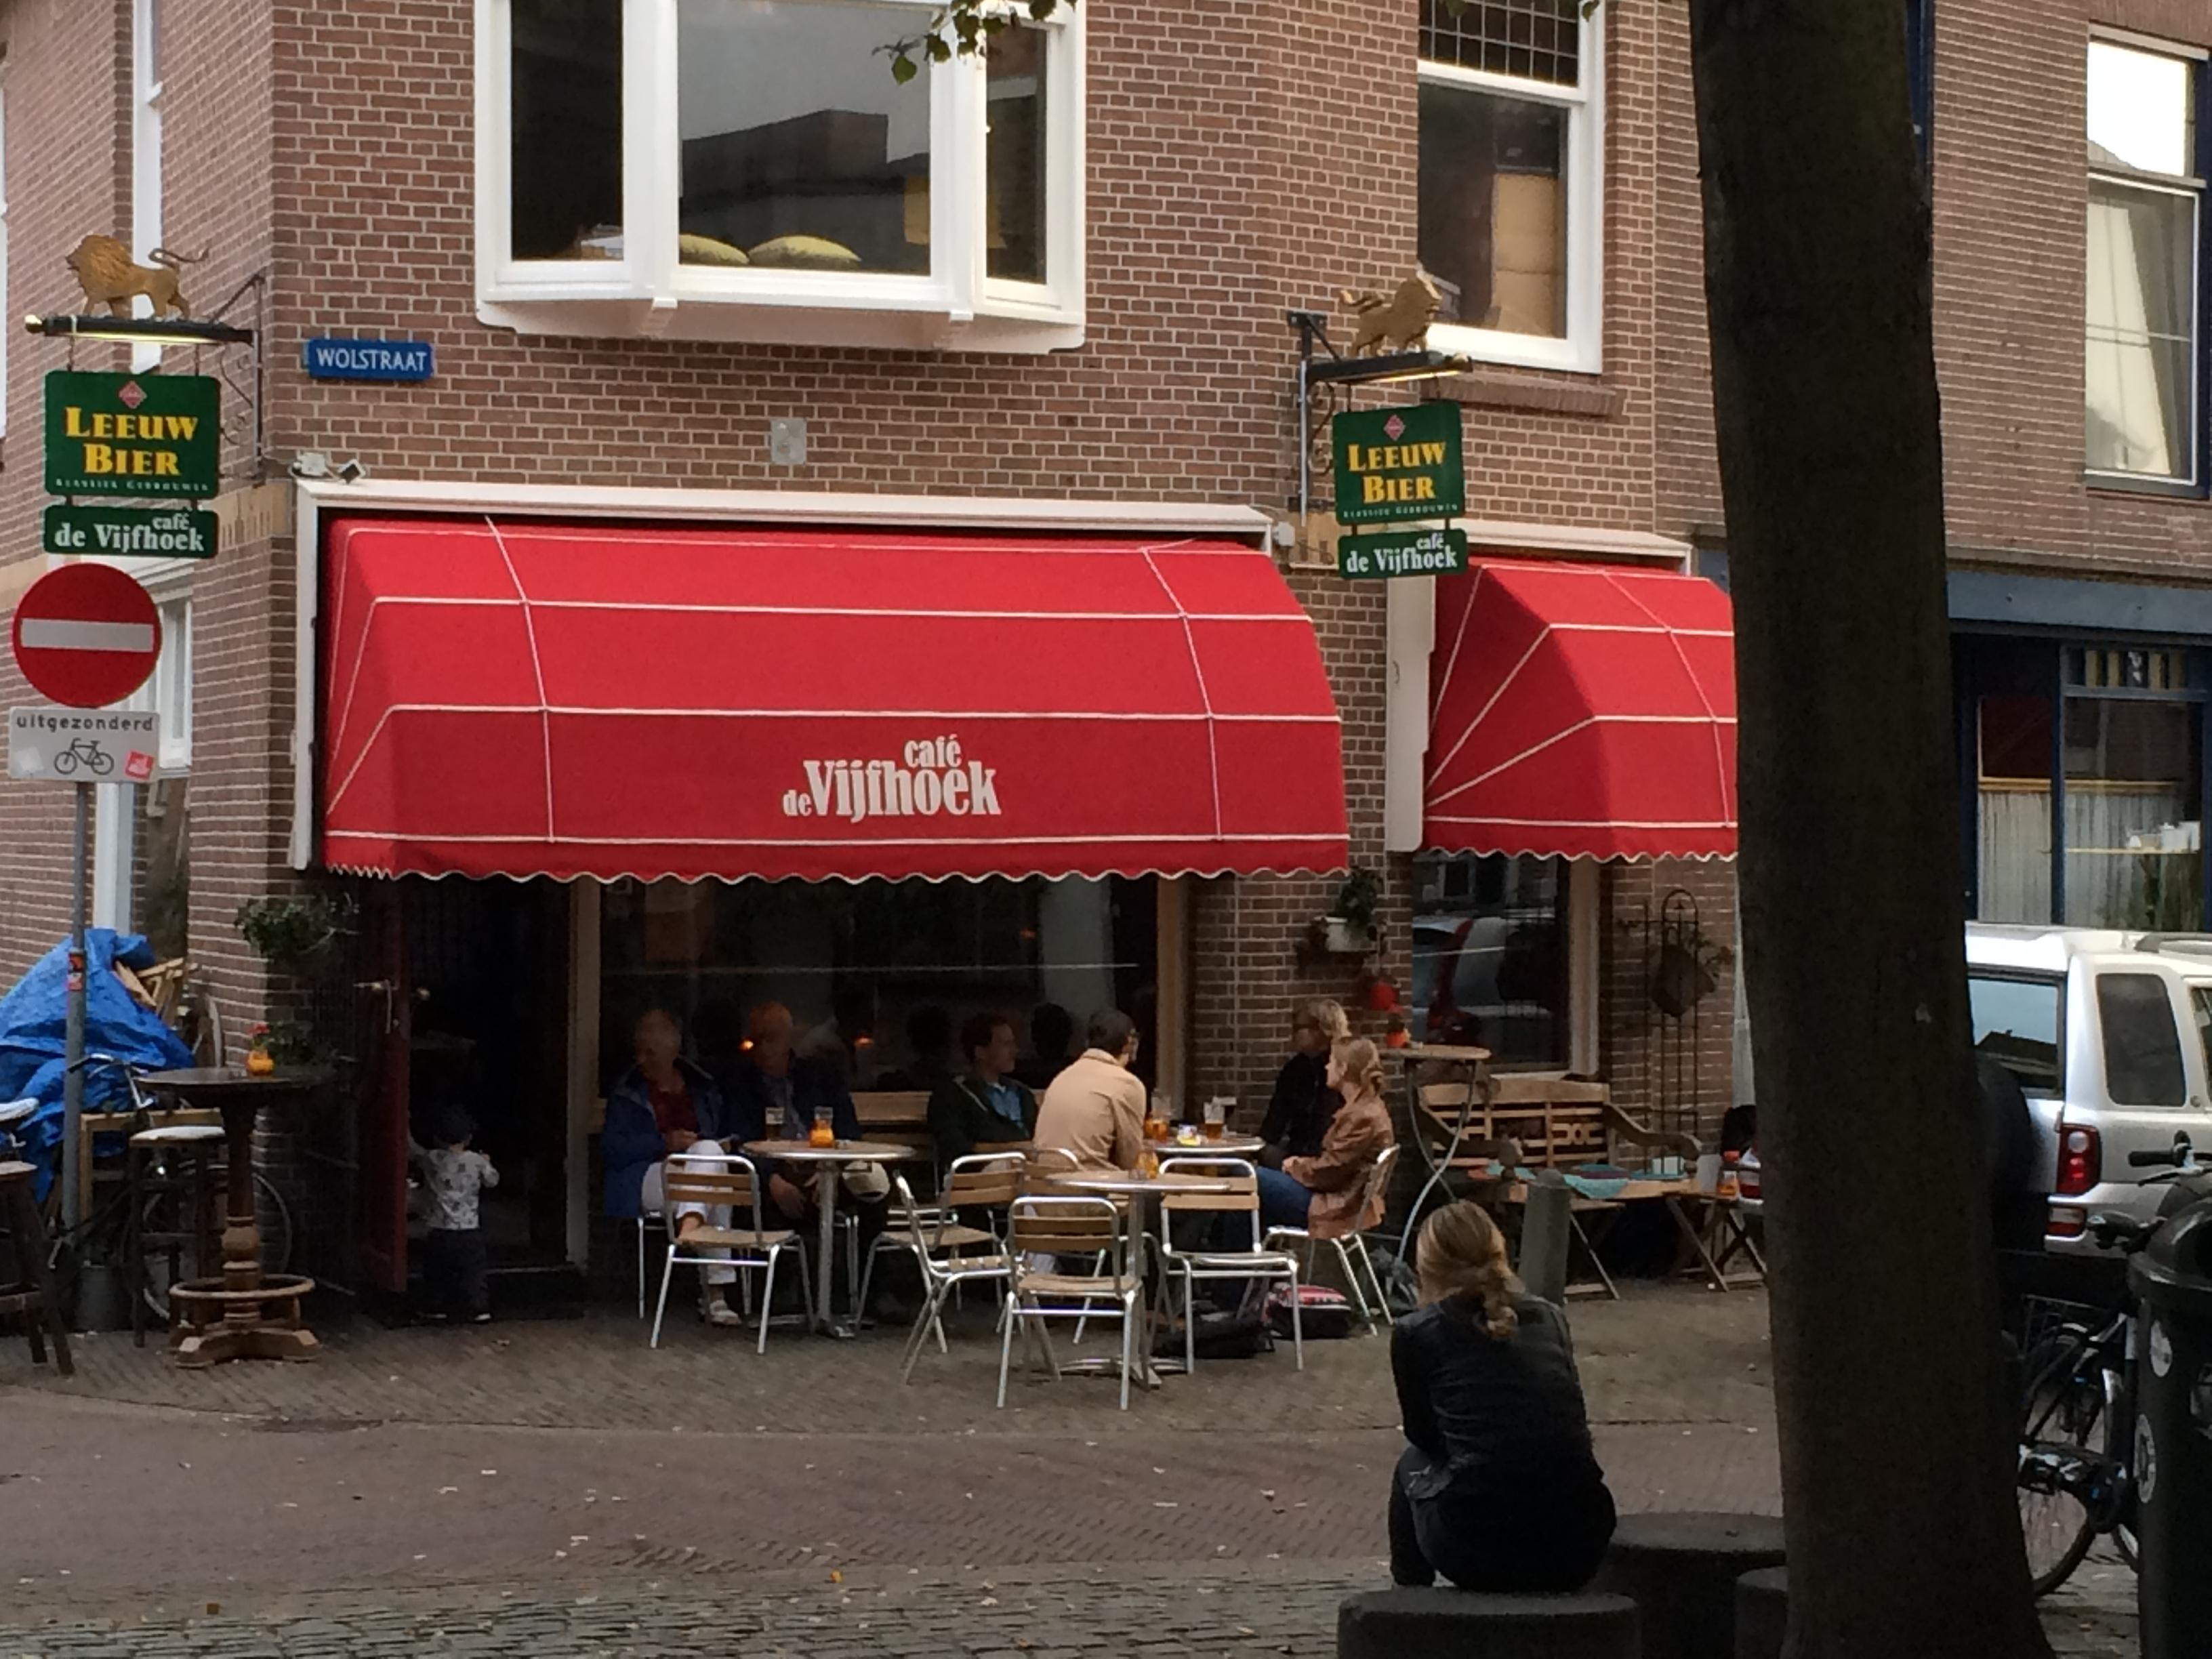 Cover image of this place Cafe de Vijfhoek